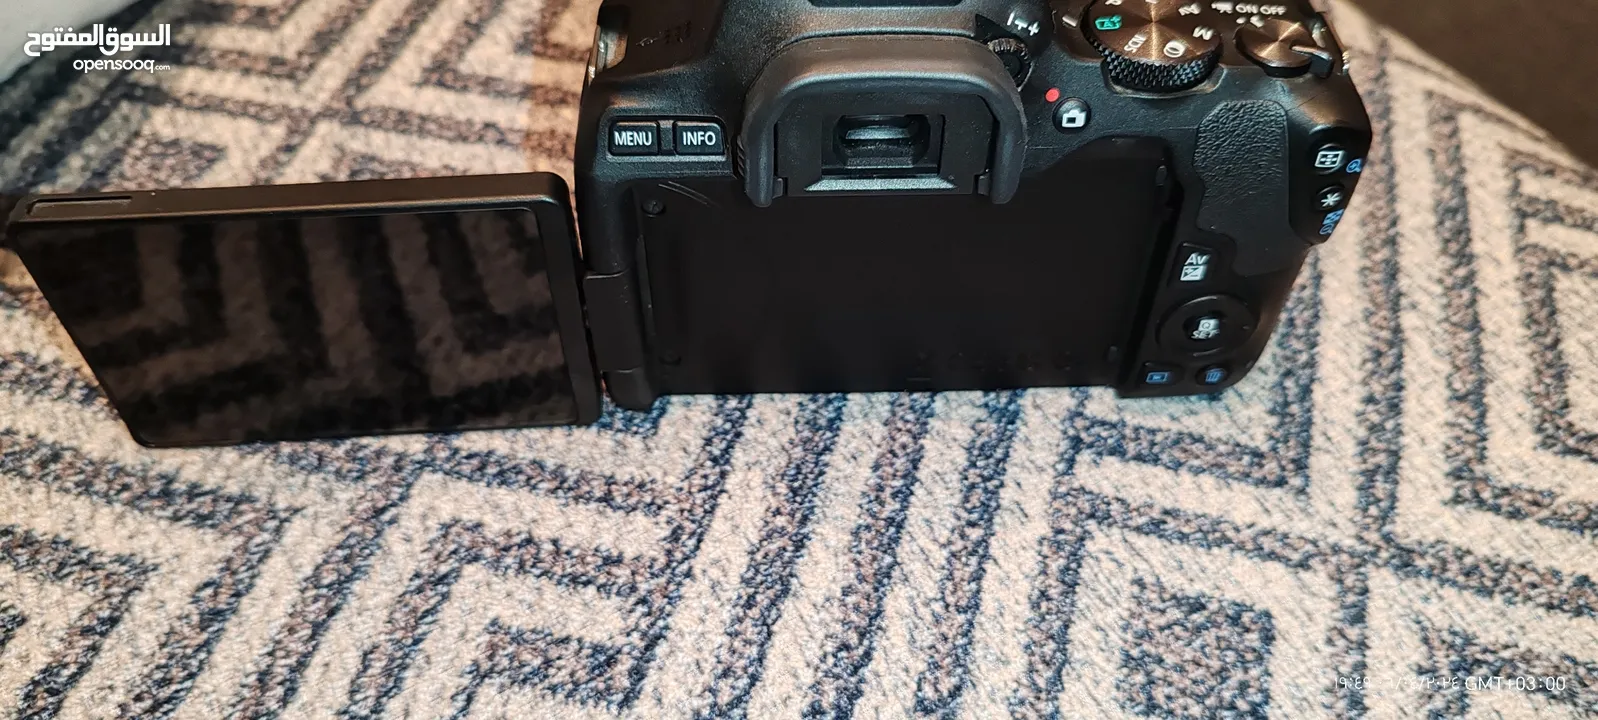 Canon EOS 250D 18-55mm Lens Kit